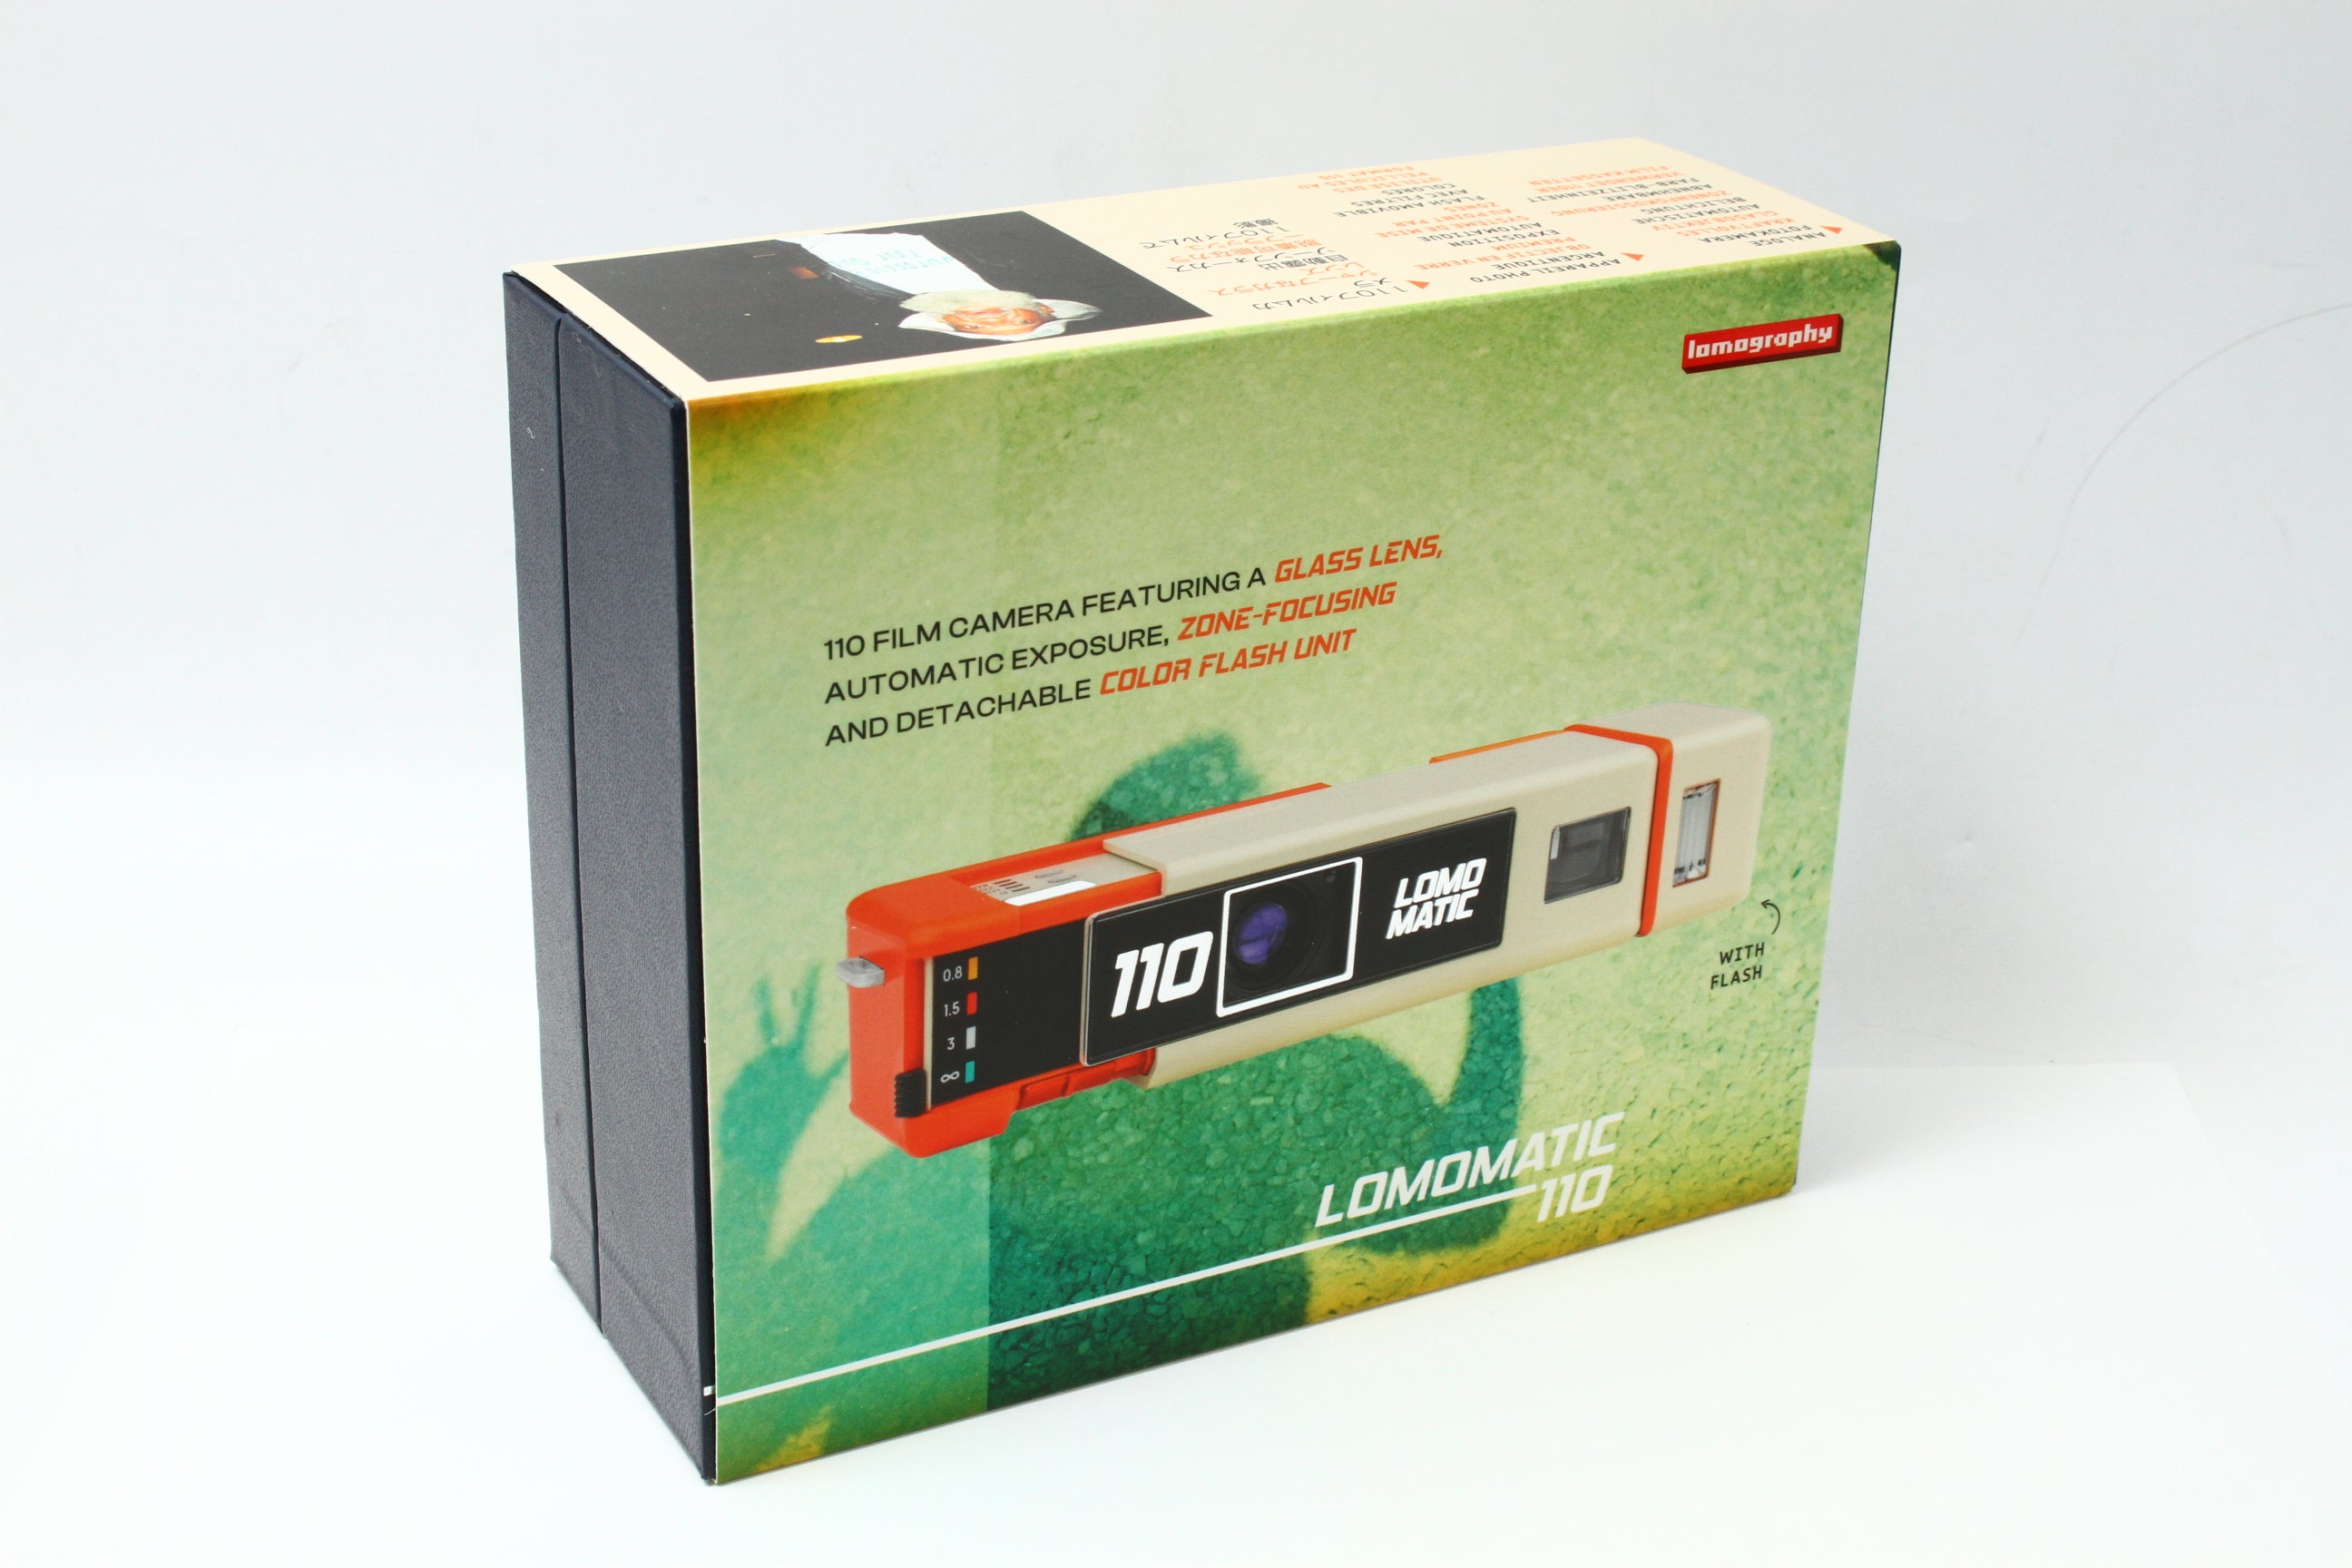 Lomomatic 110 Camera & Flash Golden Gate edition